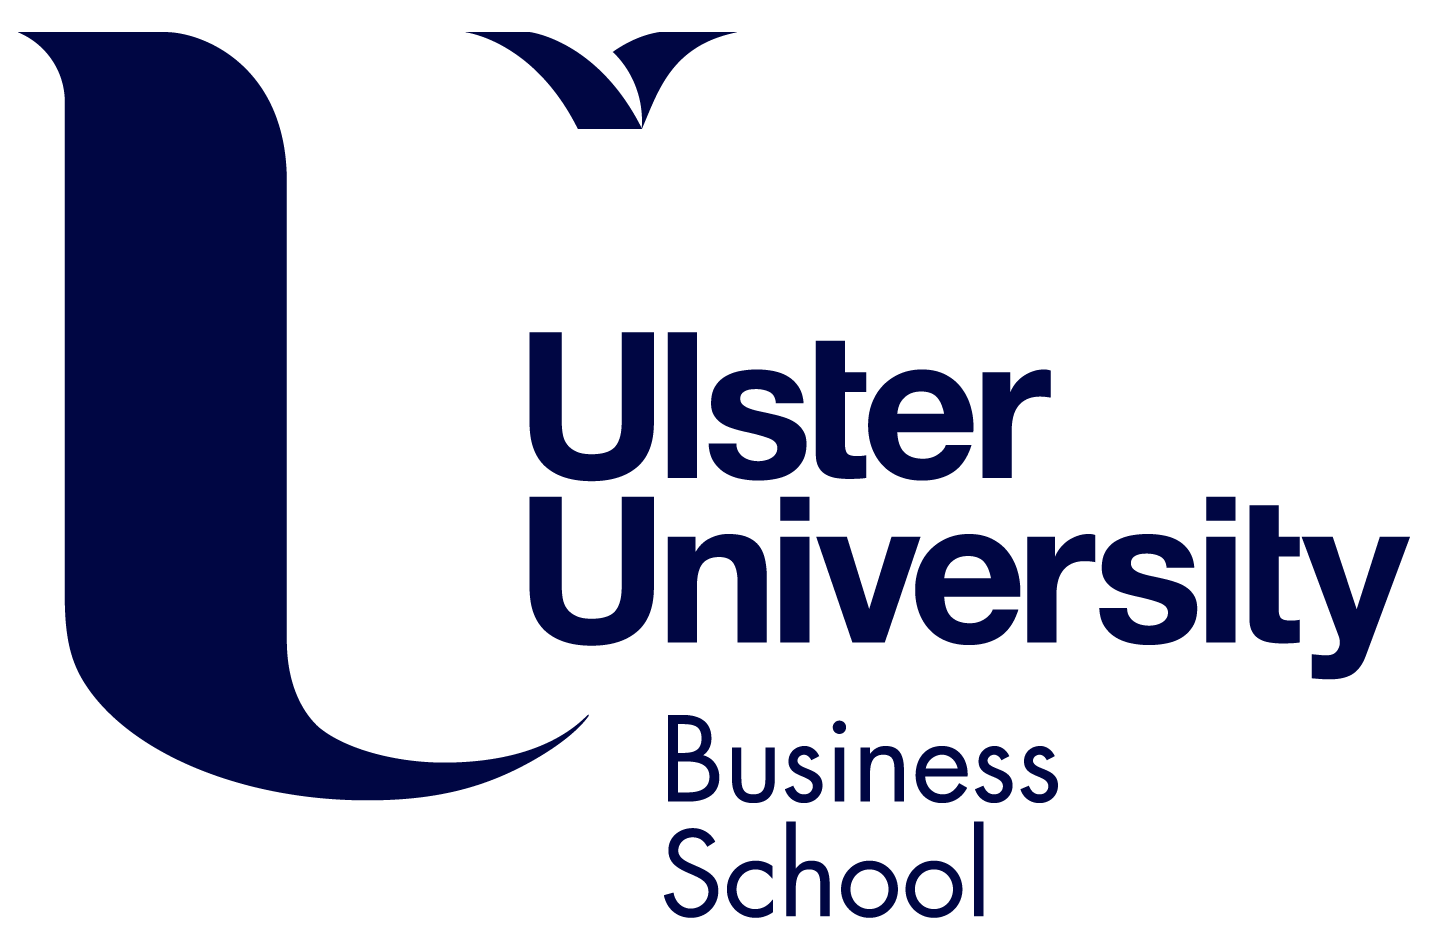 Ulster University Business School